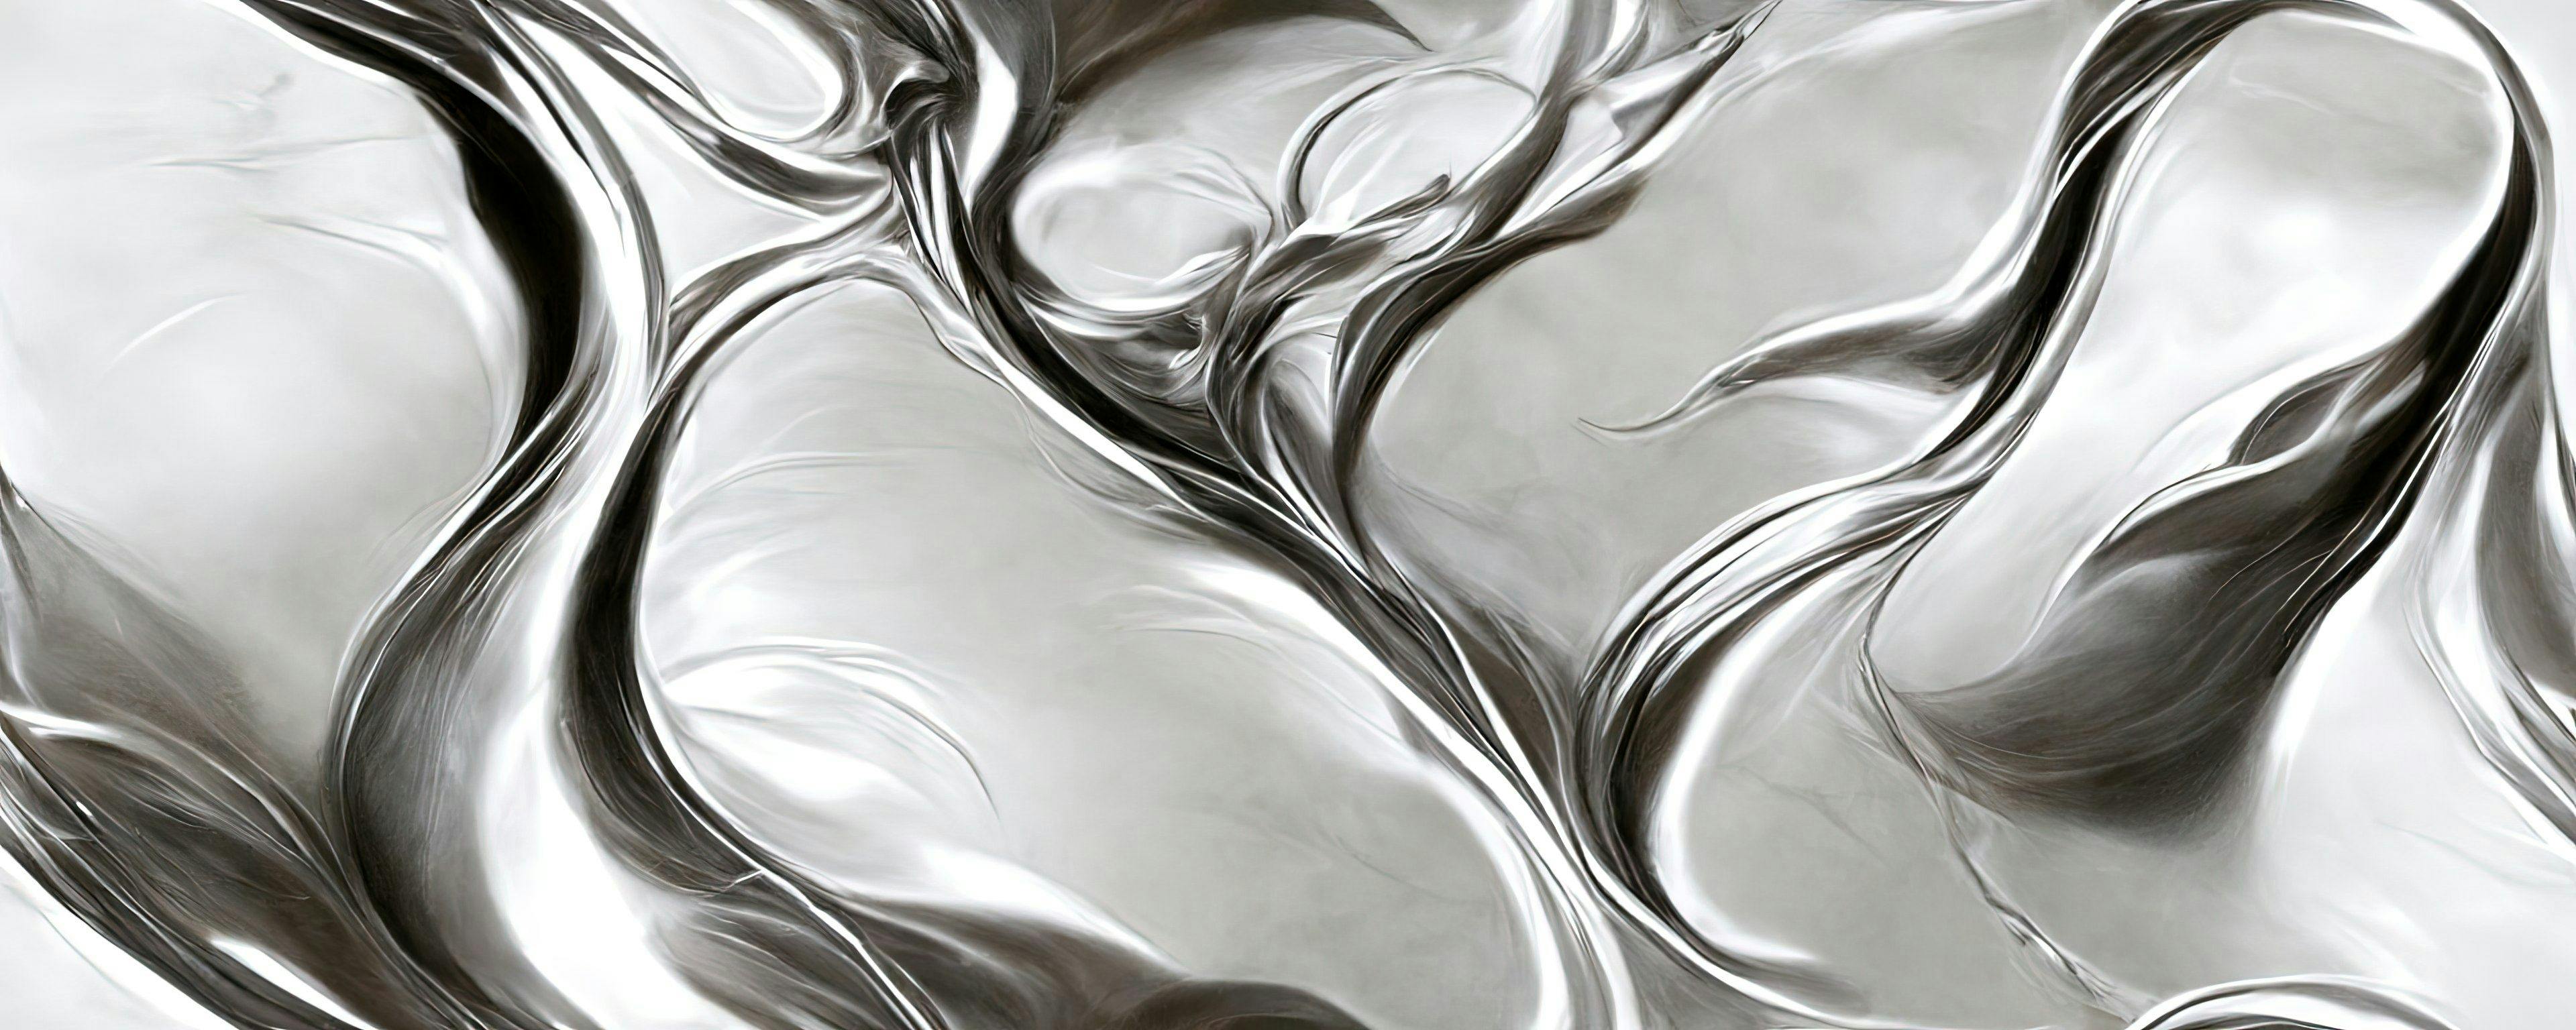 Beautiful mesmerize colorful pattern of liquid silver, mercury, beautiful background | Image Credit: © DNY3D - stock.adobe.com